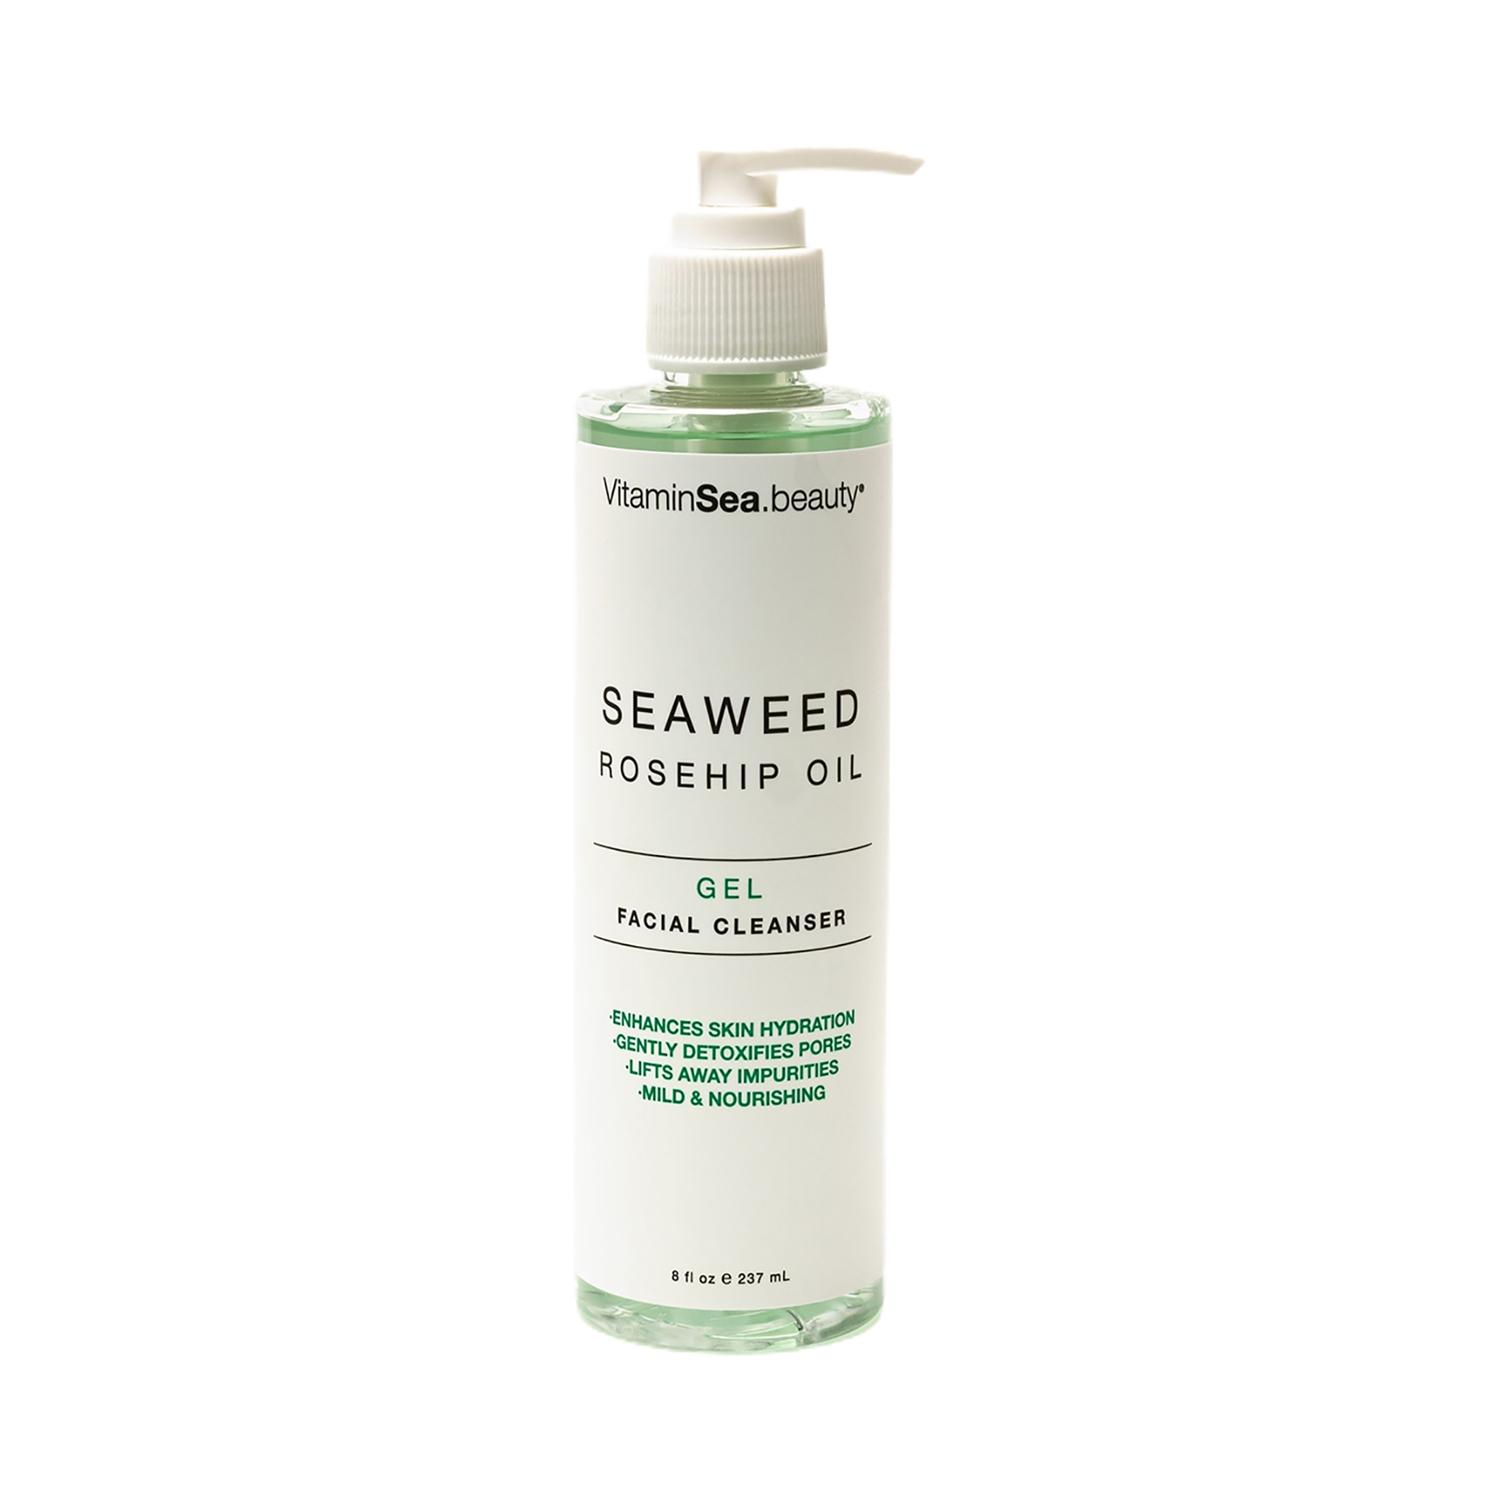 vitamins and sea beauty seaweed rosehip oil face cleanser gel (236ml)